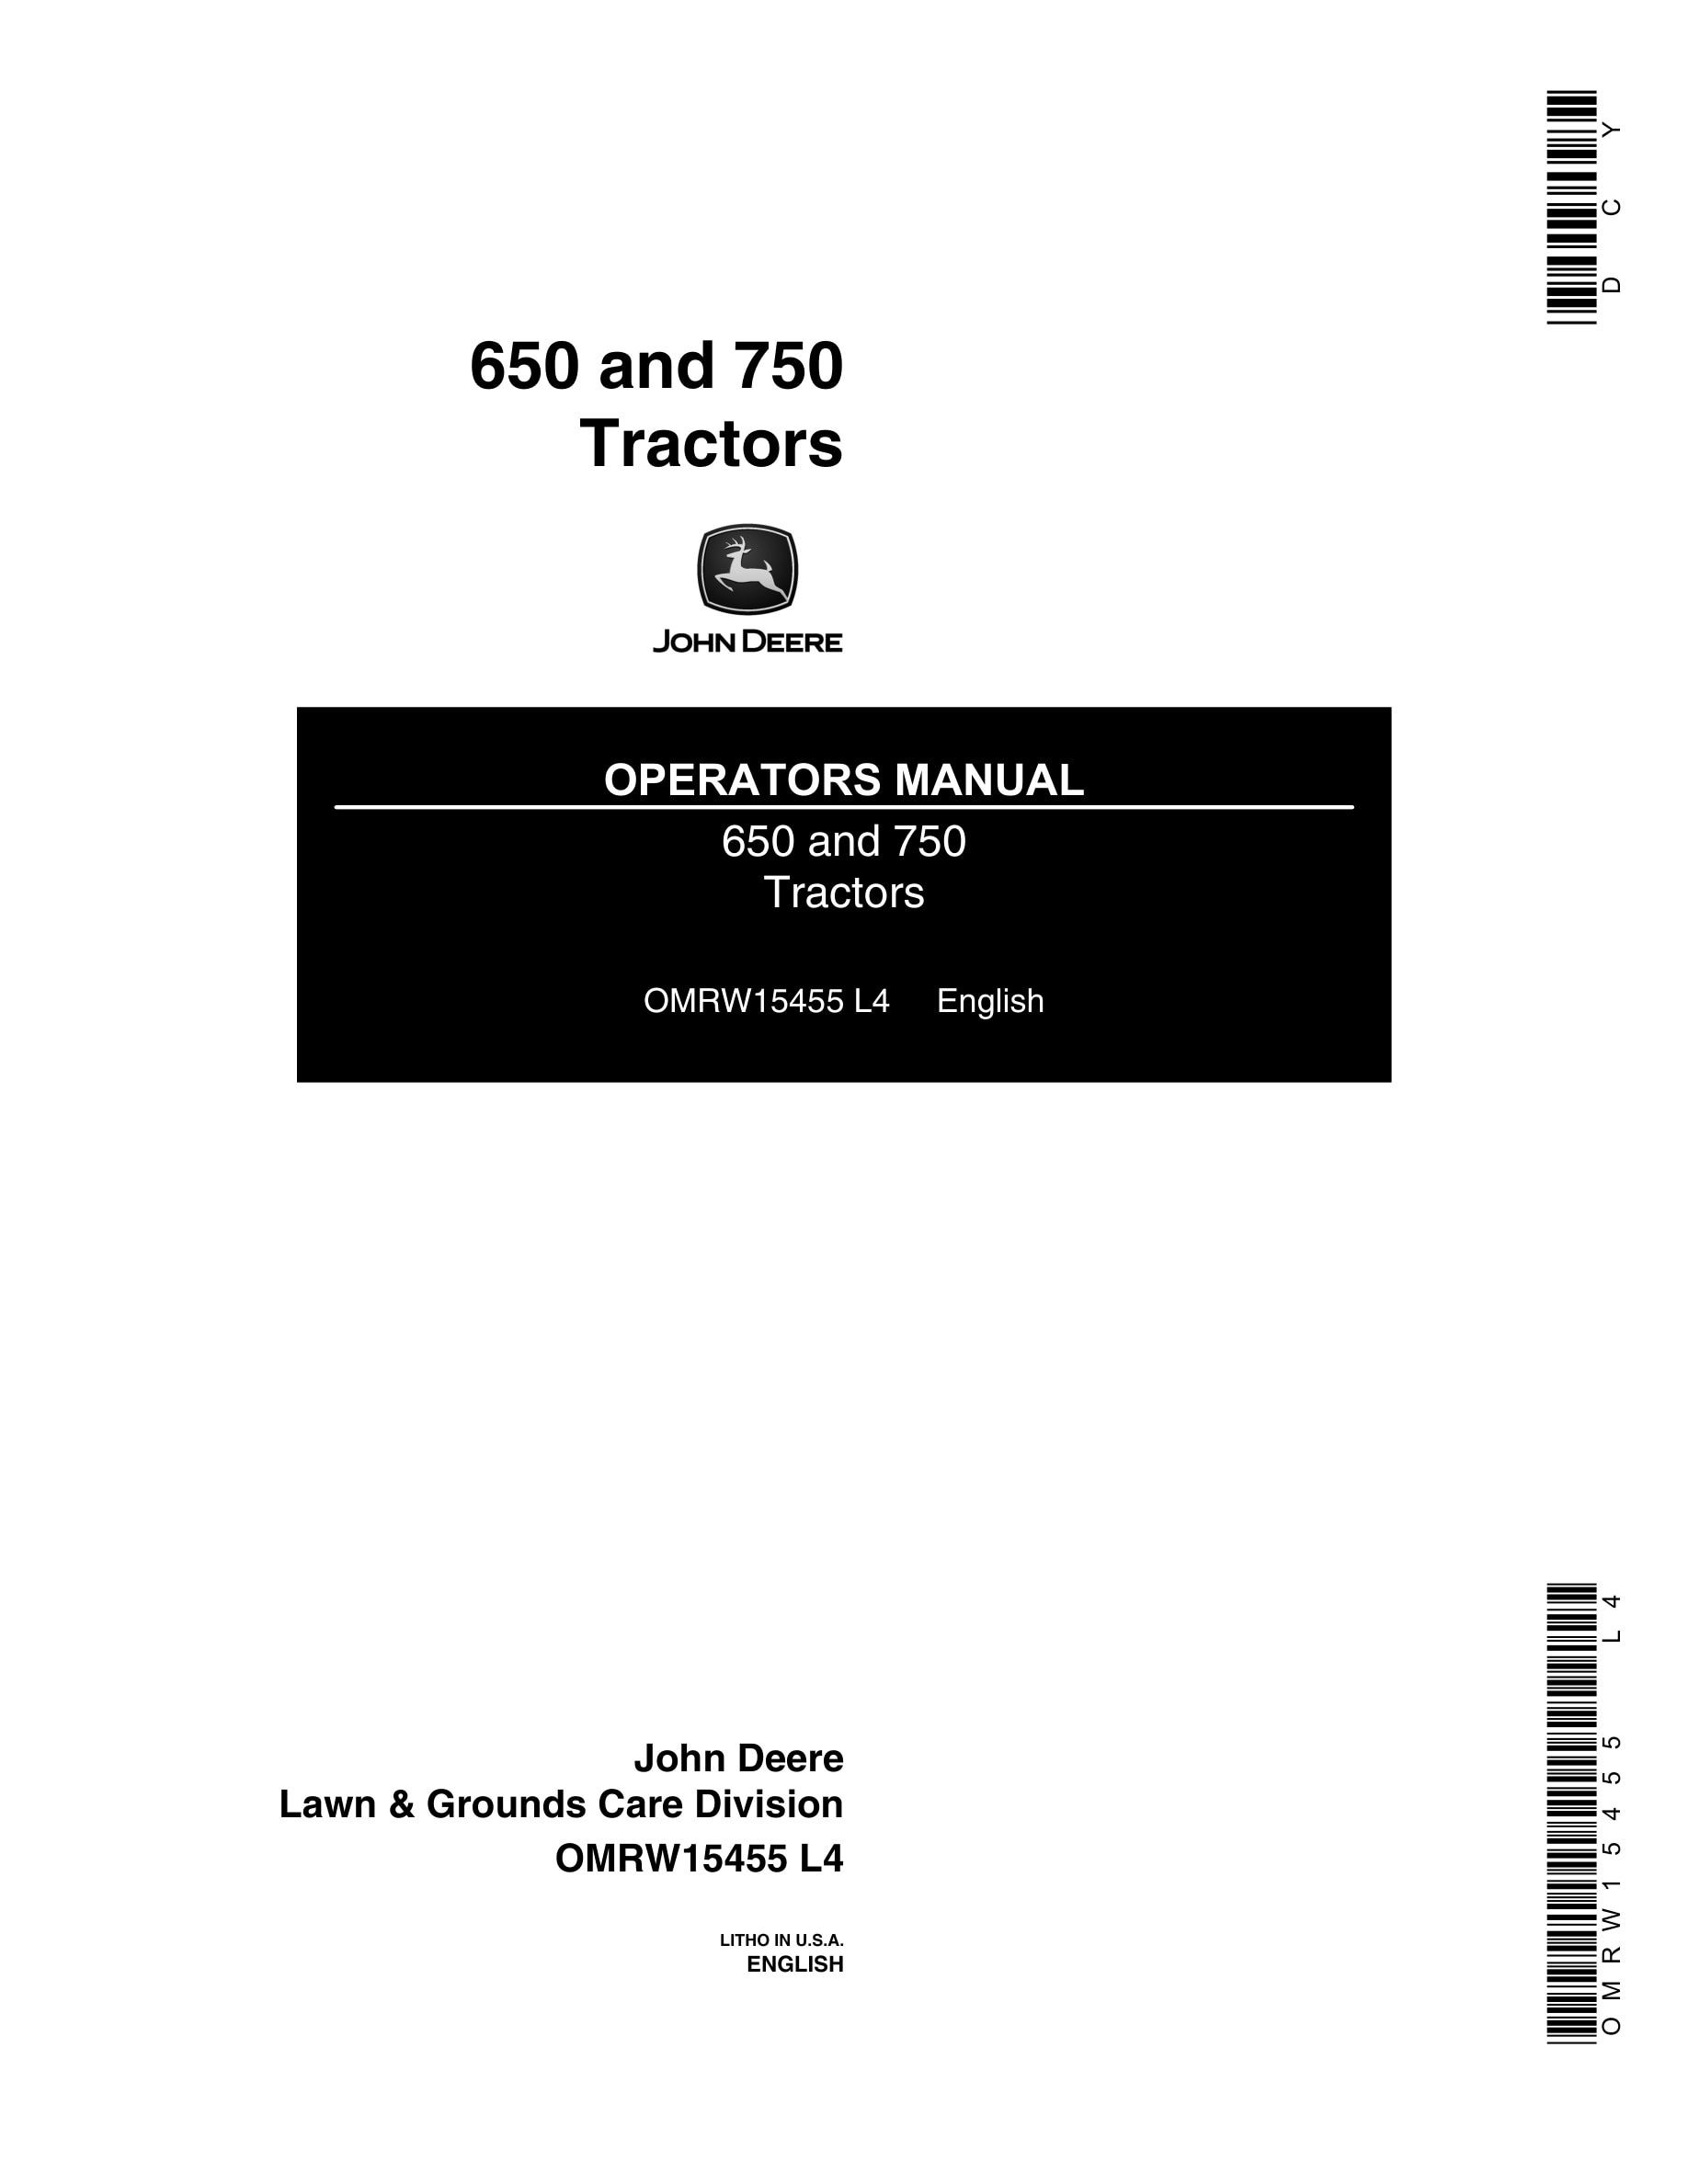 John Deere 650 and 750 Tractor Operator Manual OMRW15455-1